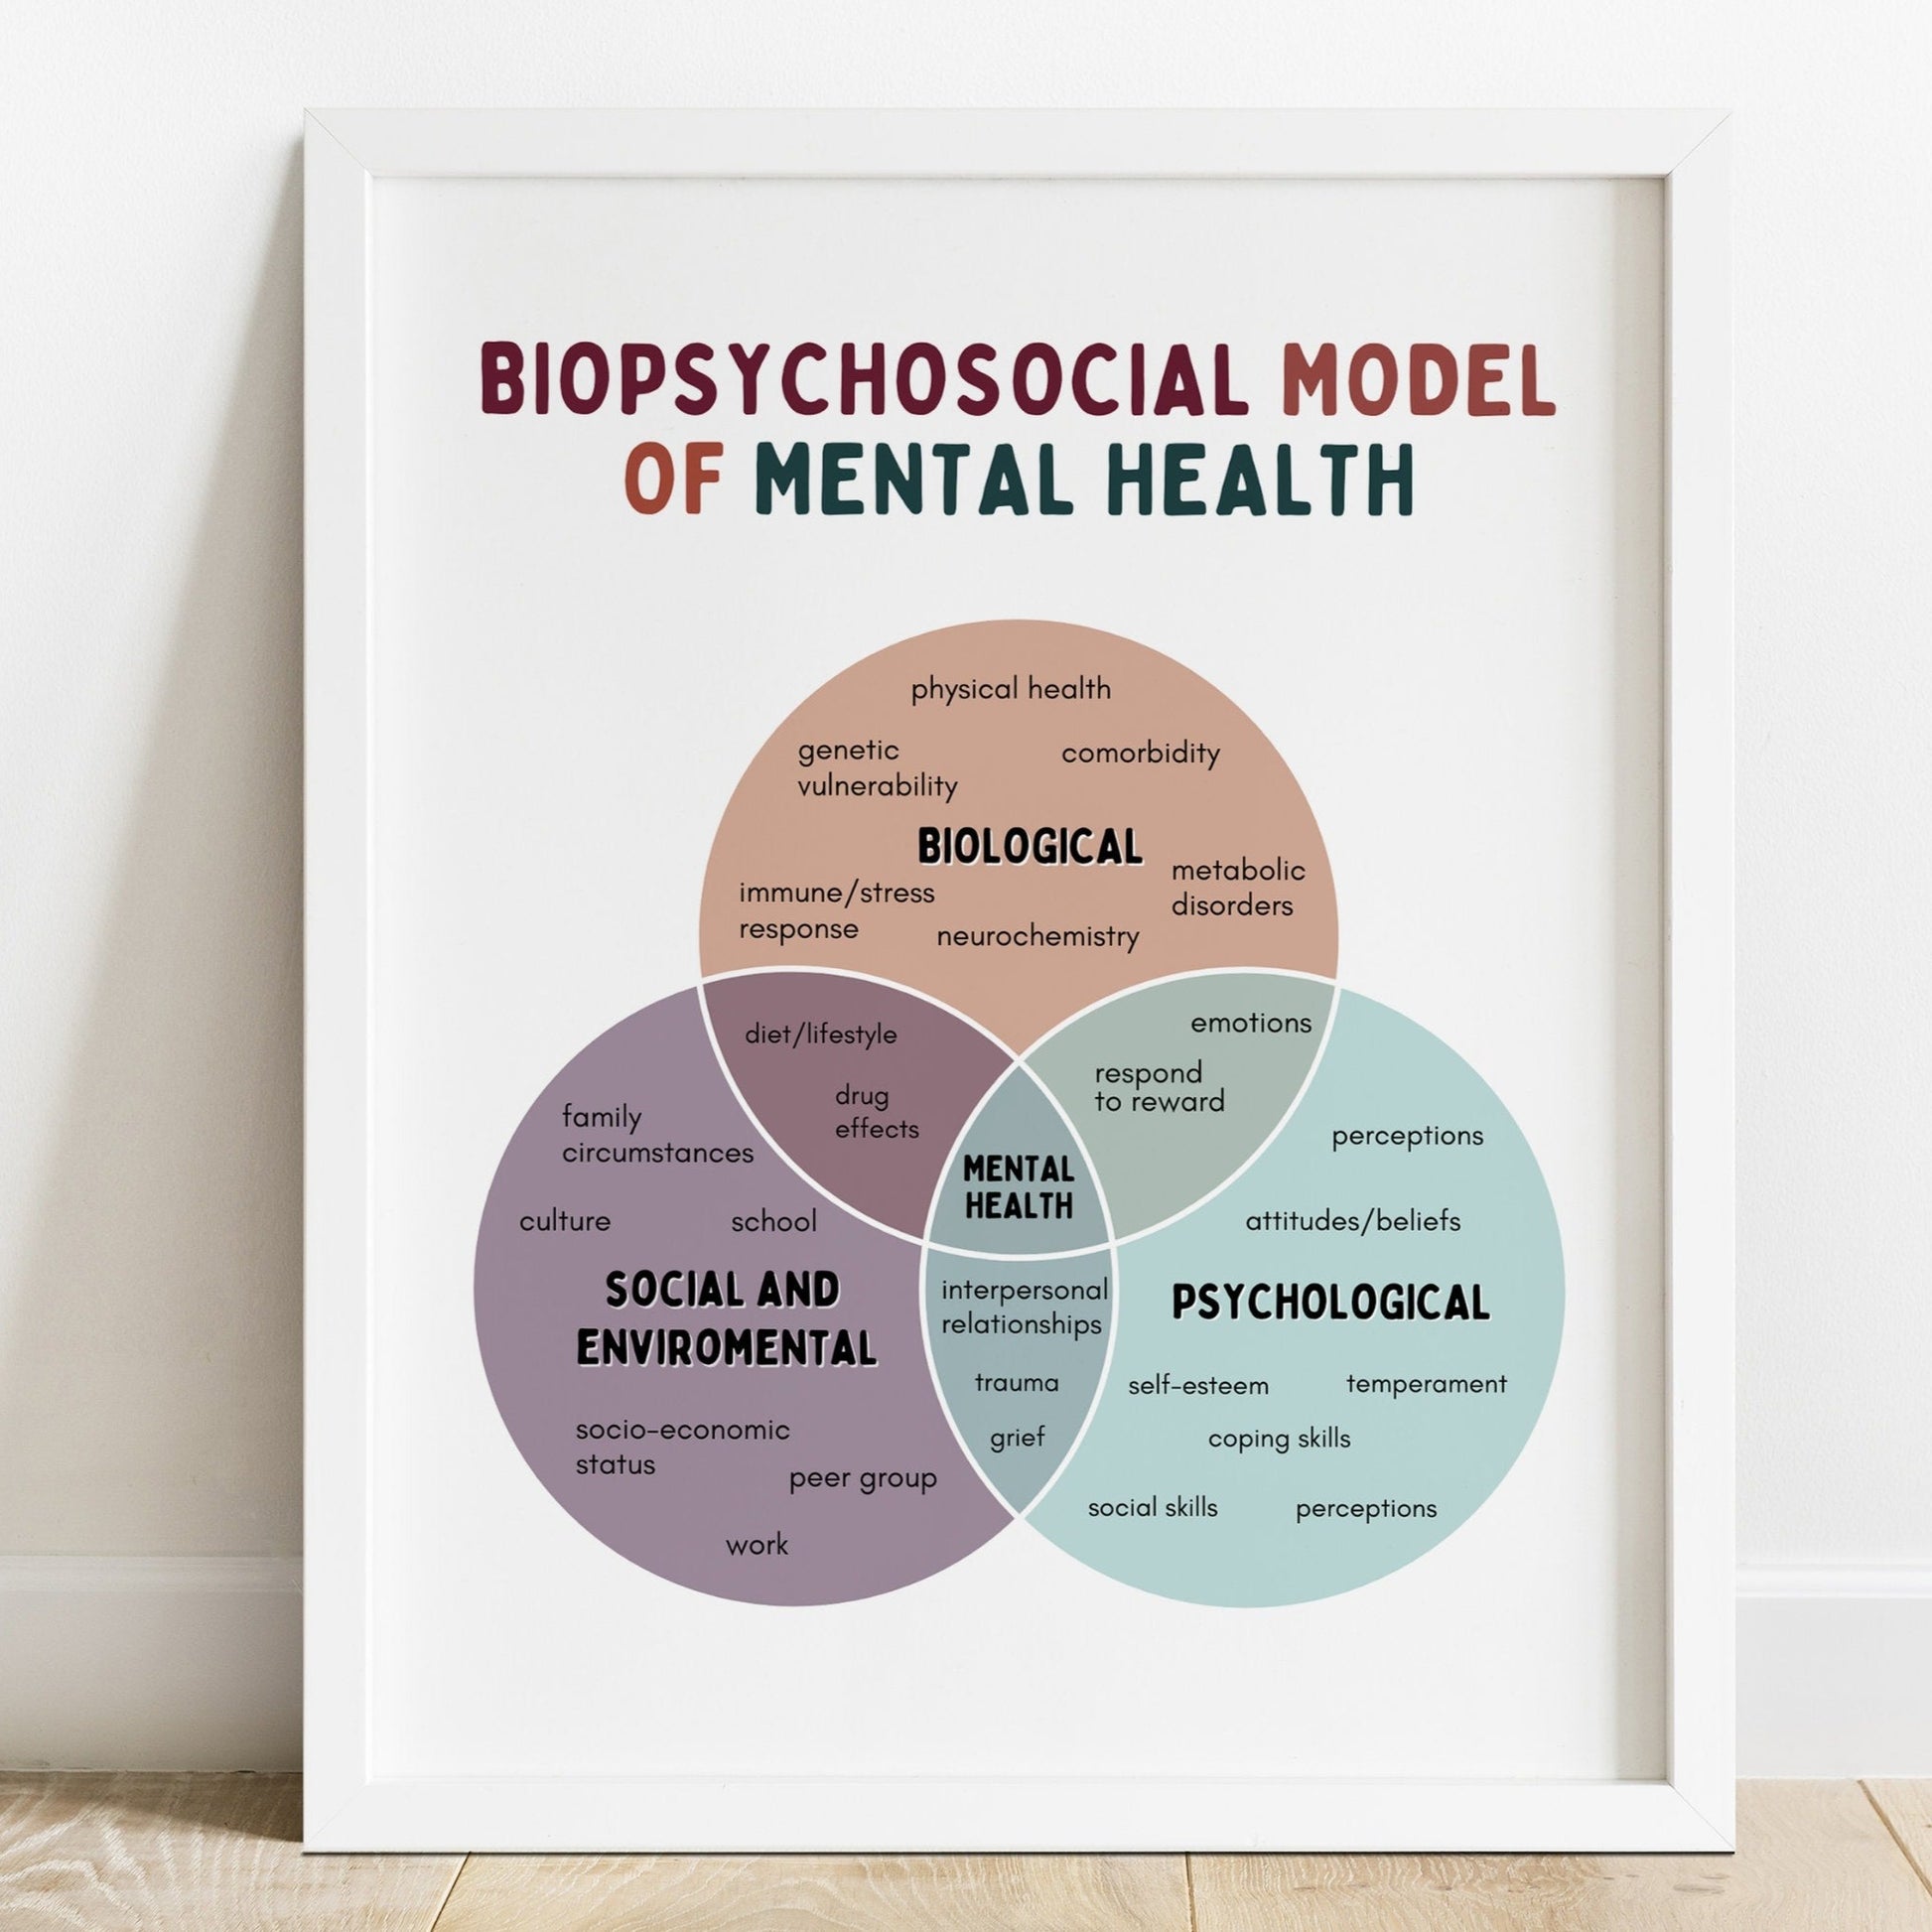 biopsychosocial model of mental health